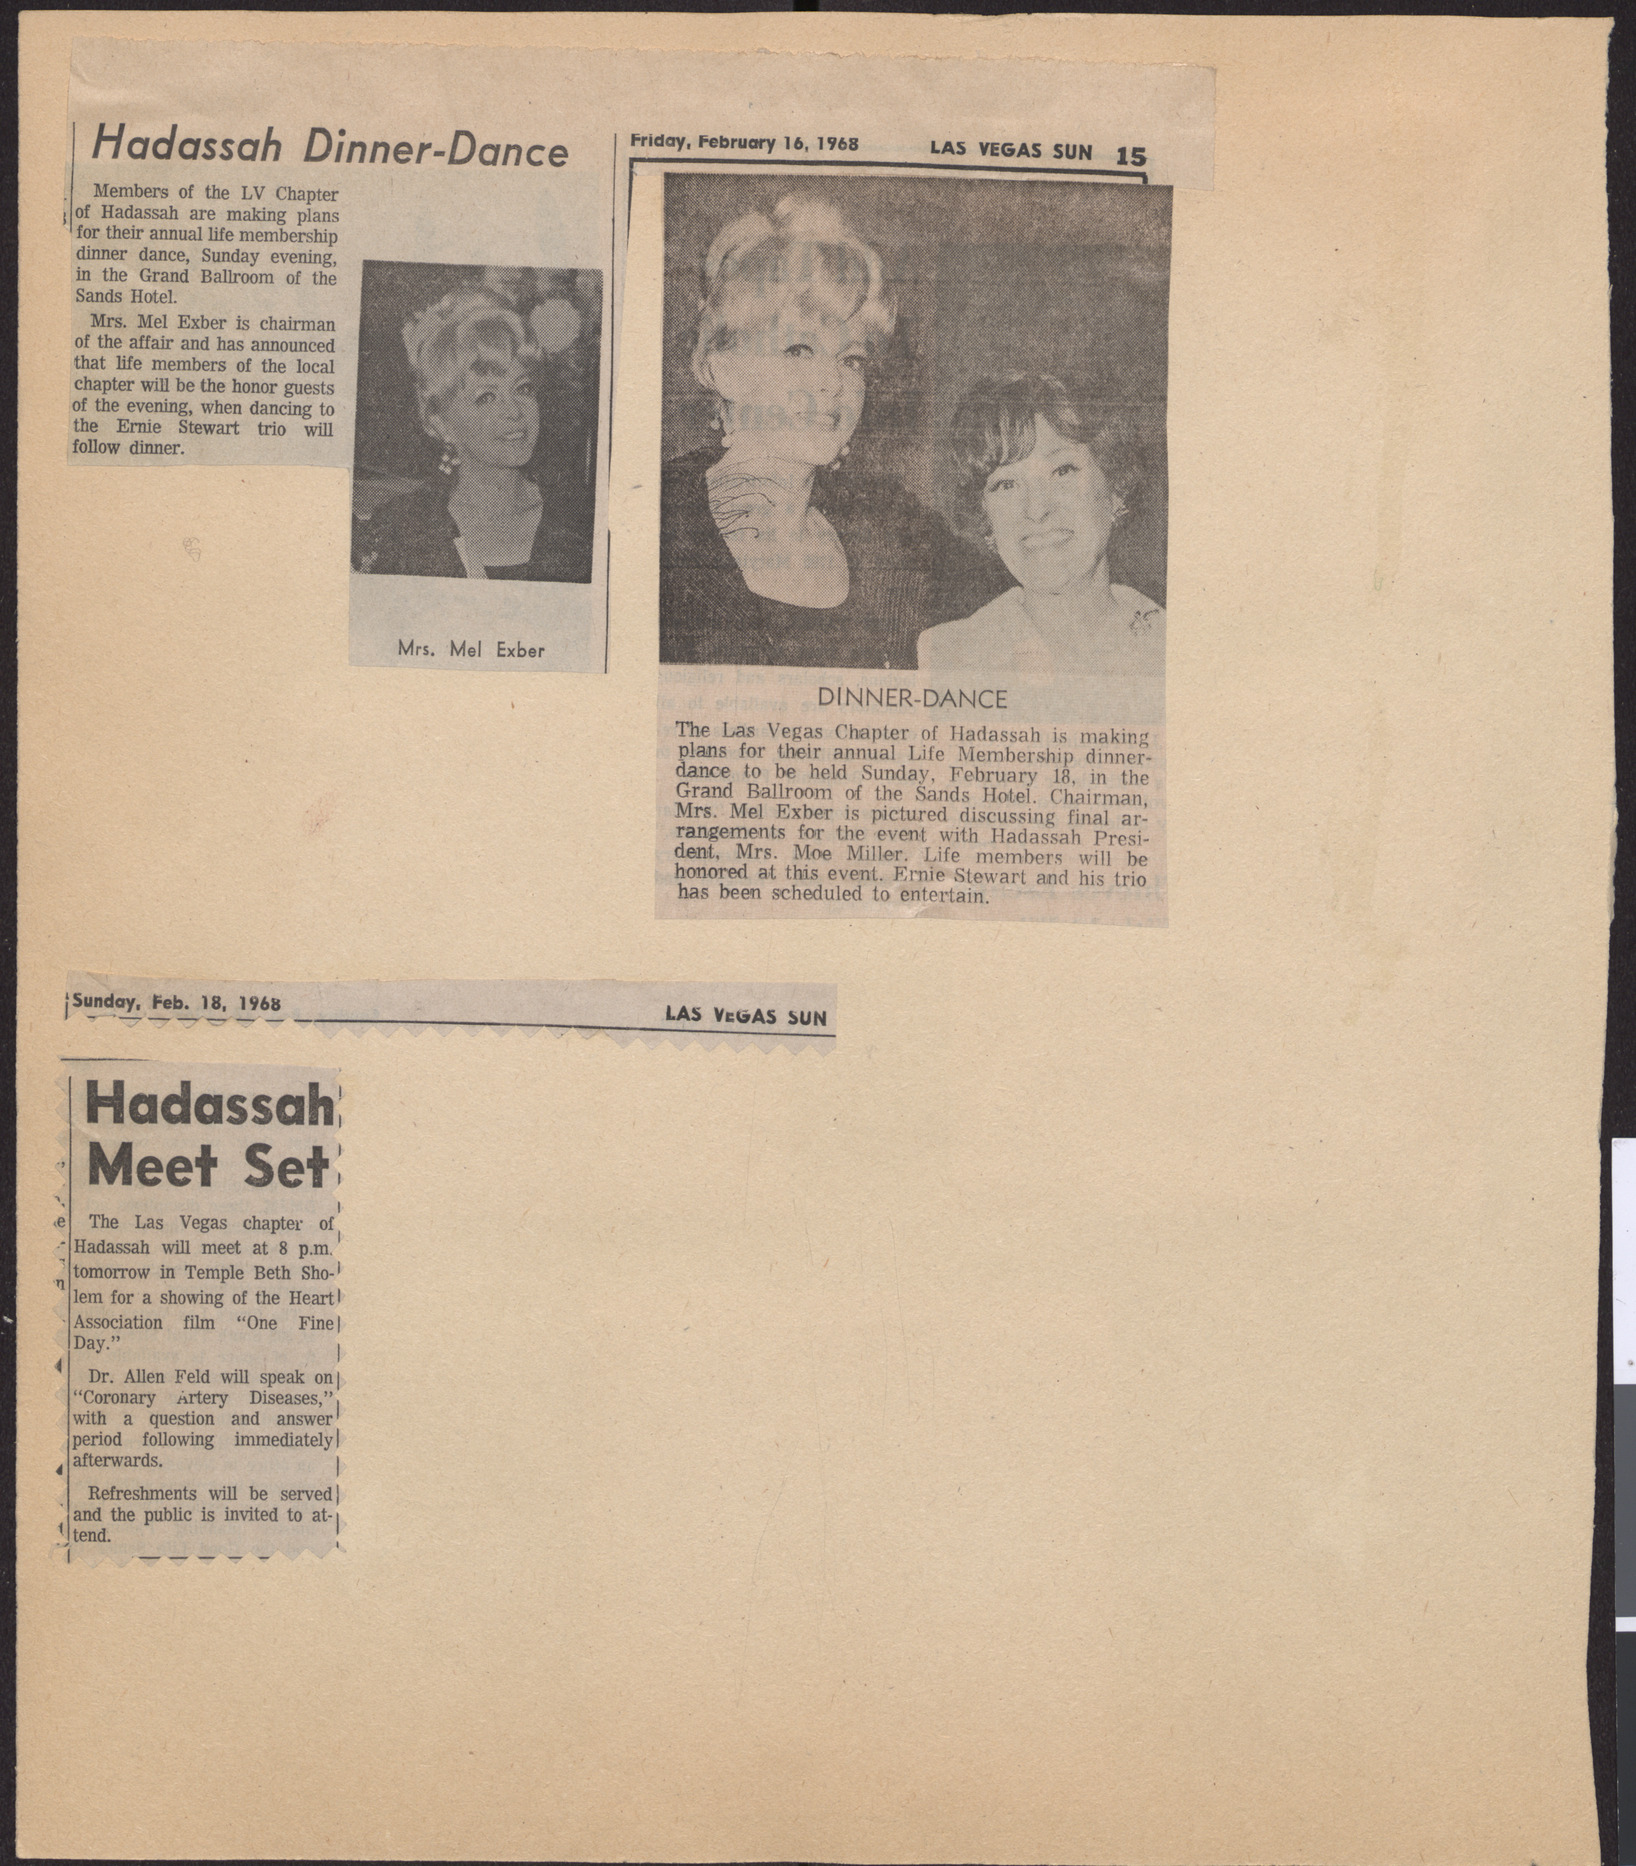 Newspaper clippings, Hadassah Dinner-Dance, Las Vegas Sun, February 16, 1968, and  Hadassah Meet Set, Las Vegas Sun, February 18, 1968